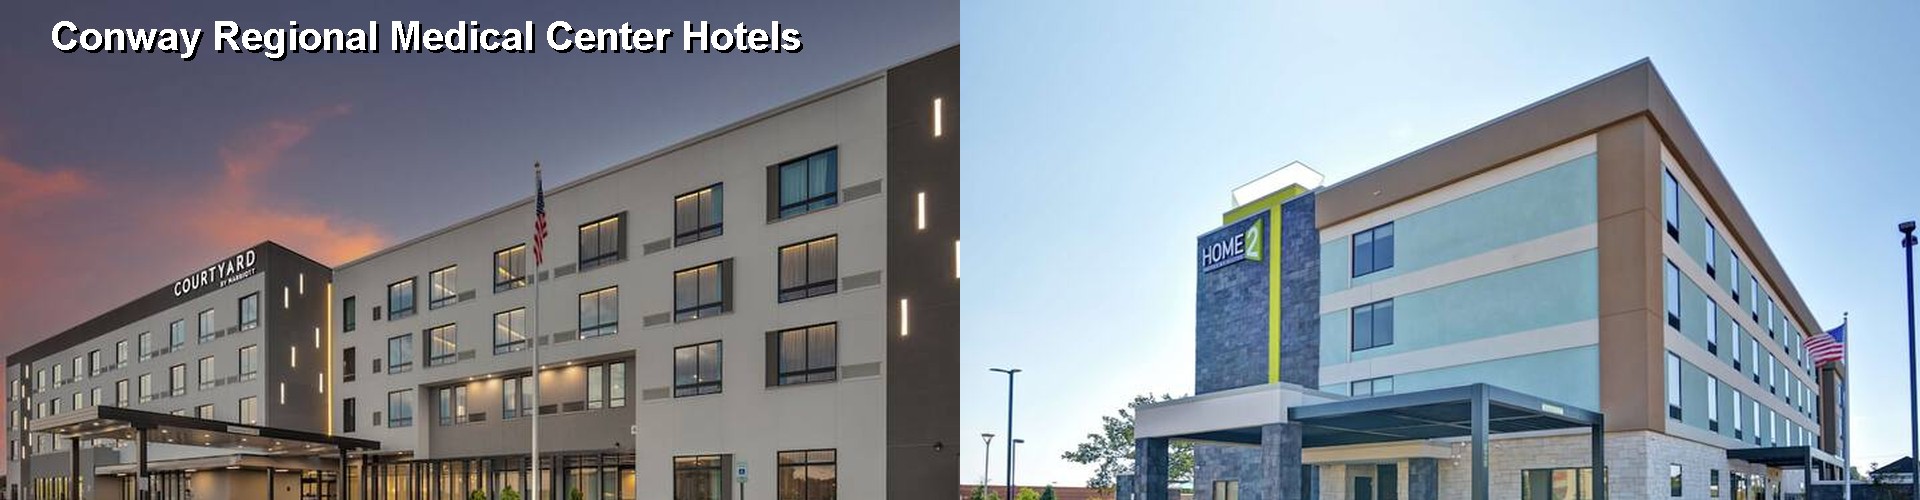 5 Best Hotels near Conway Regional Medical Center